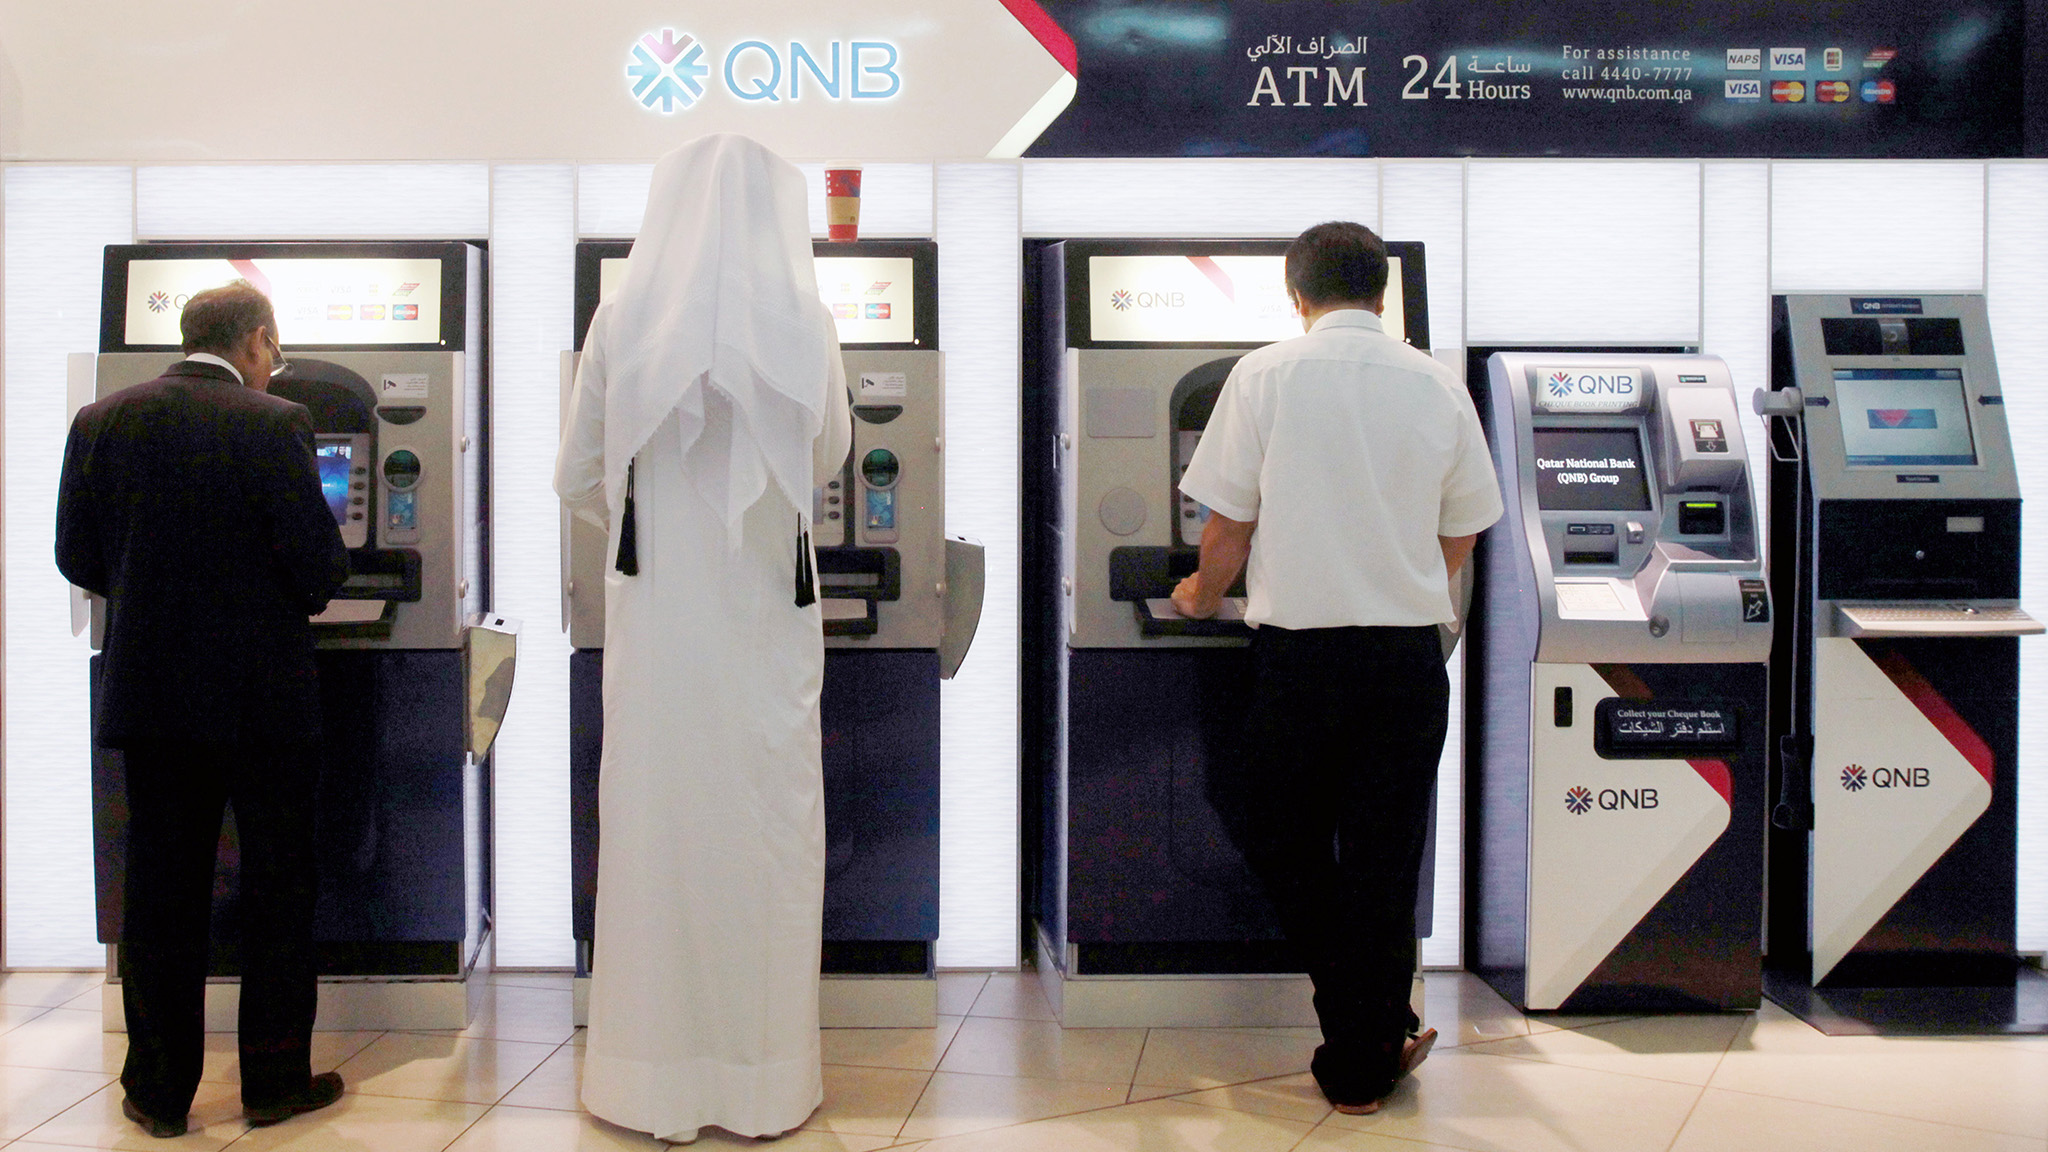 Injeksi Modal Bank QNB (BKSW) Rp1,5 Triliun, Ini Harapan Qatar National Bank